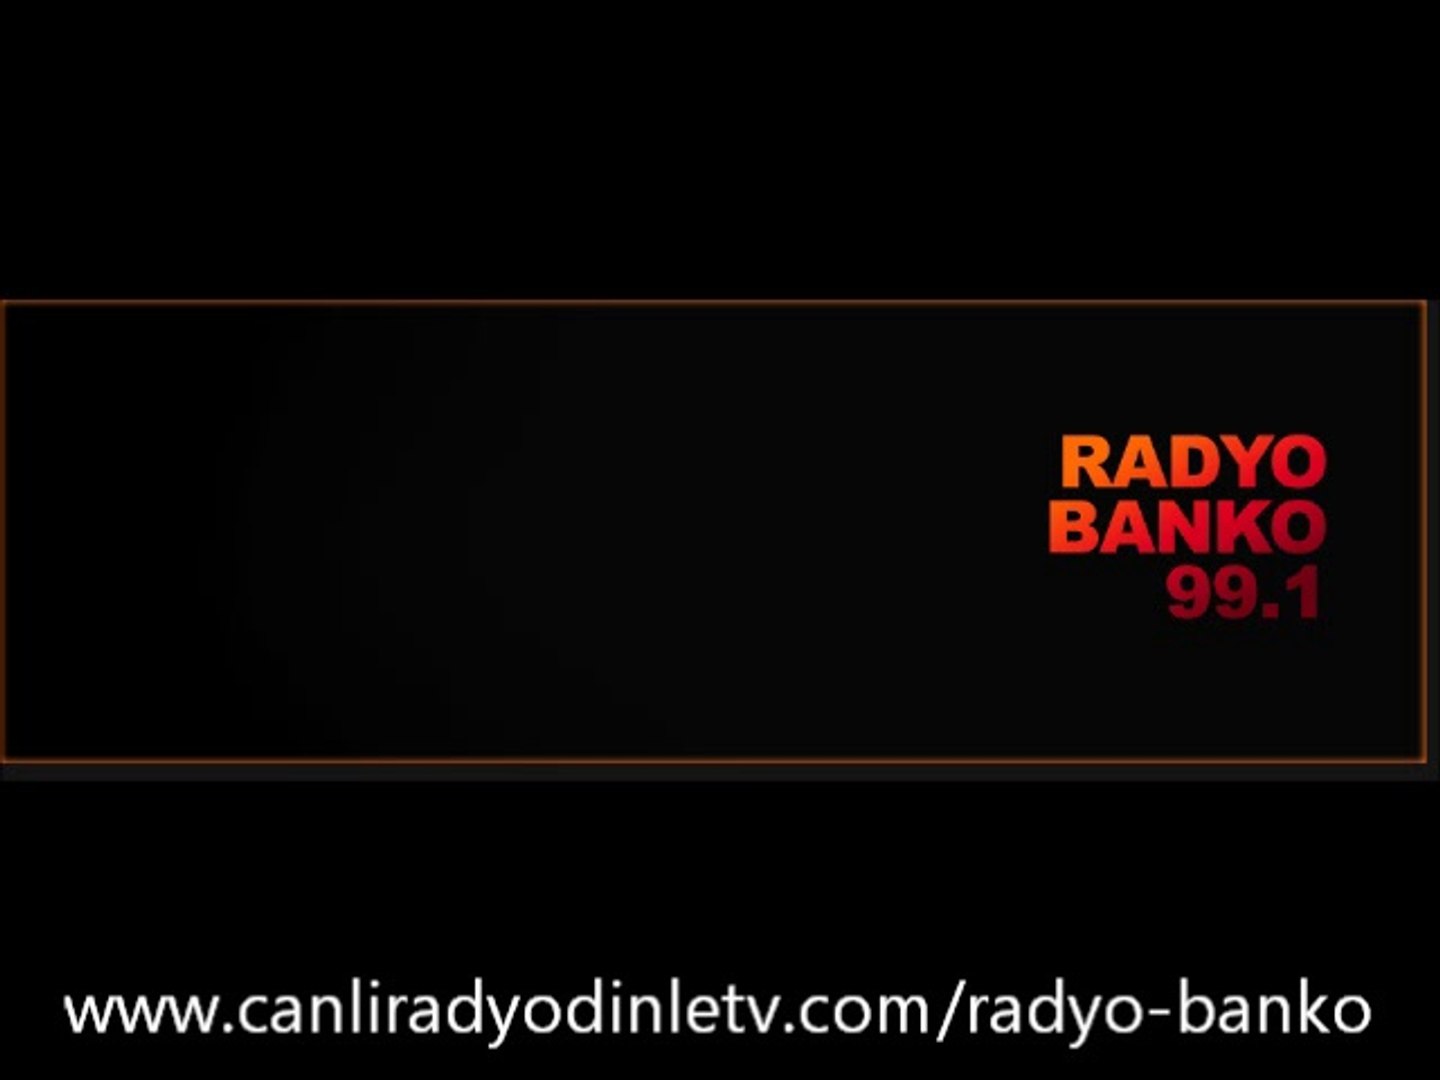 Banko Radyo - Dailymotion Video